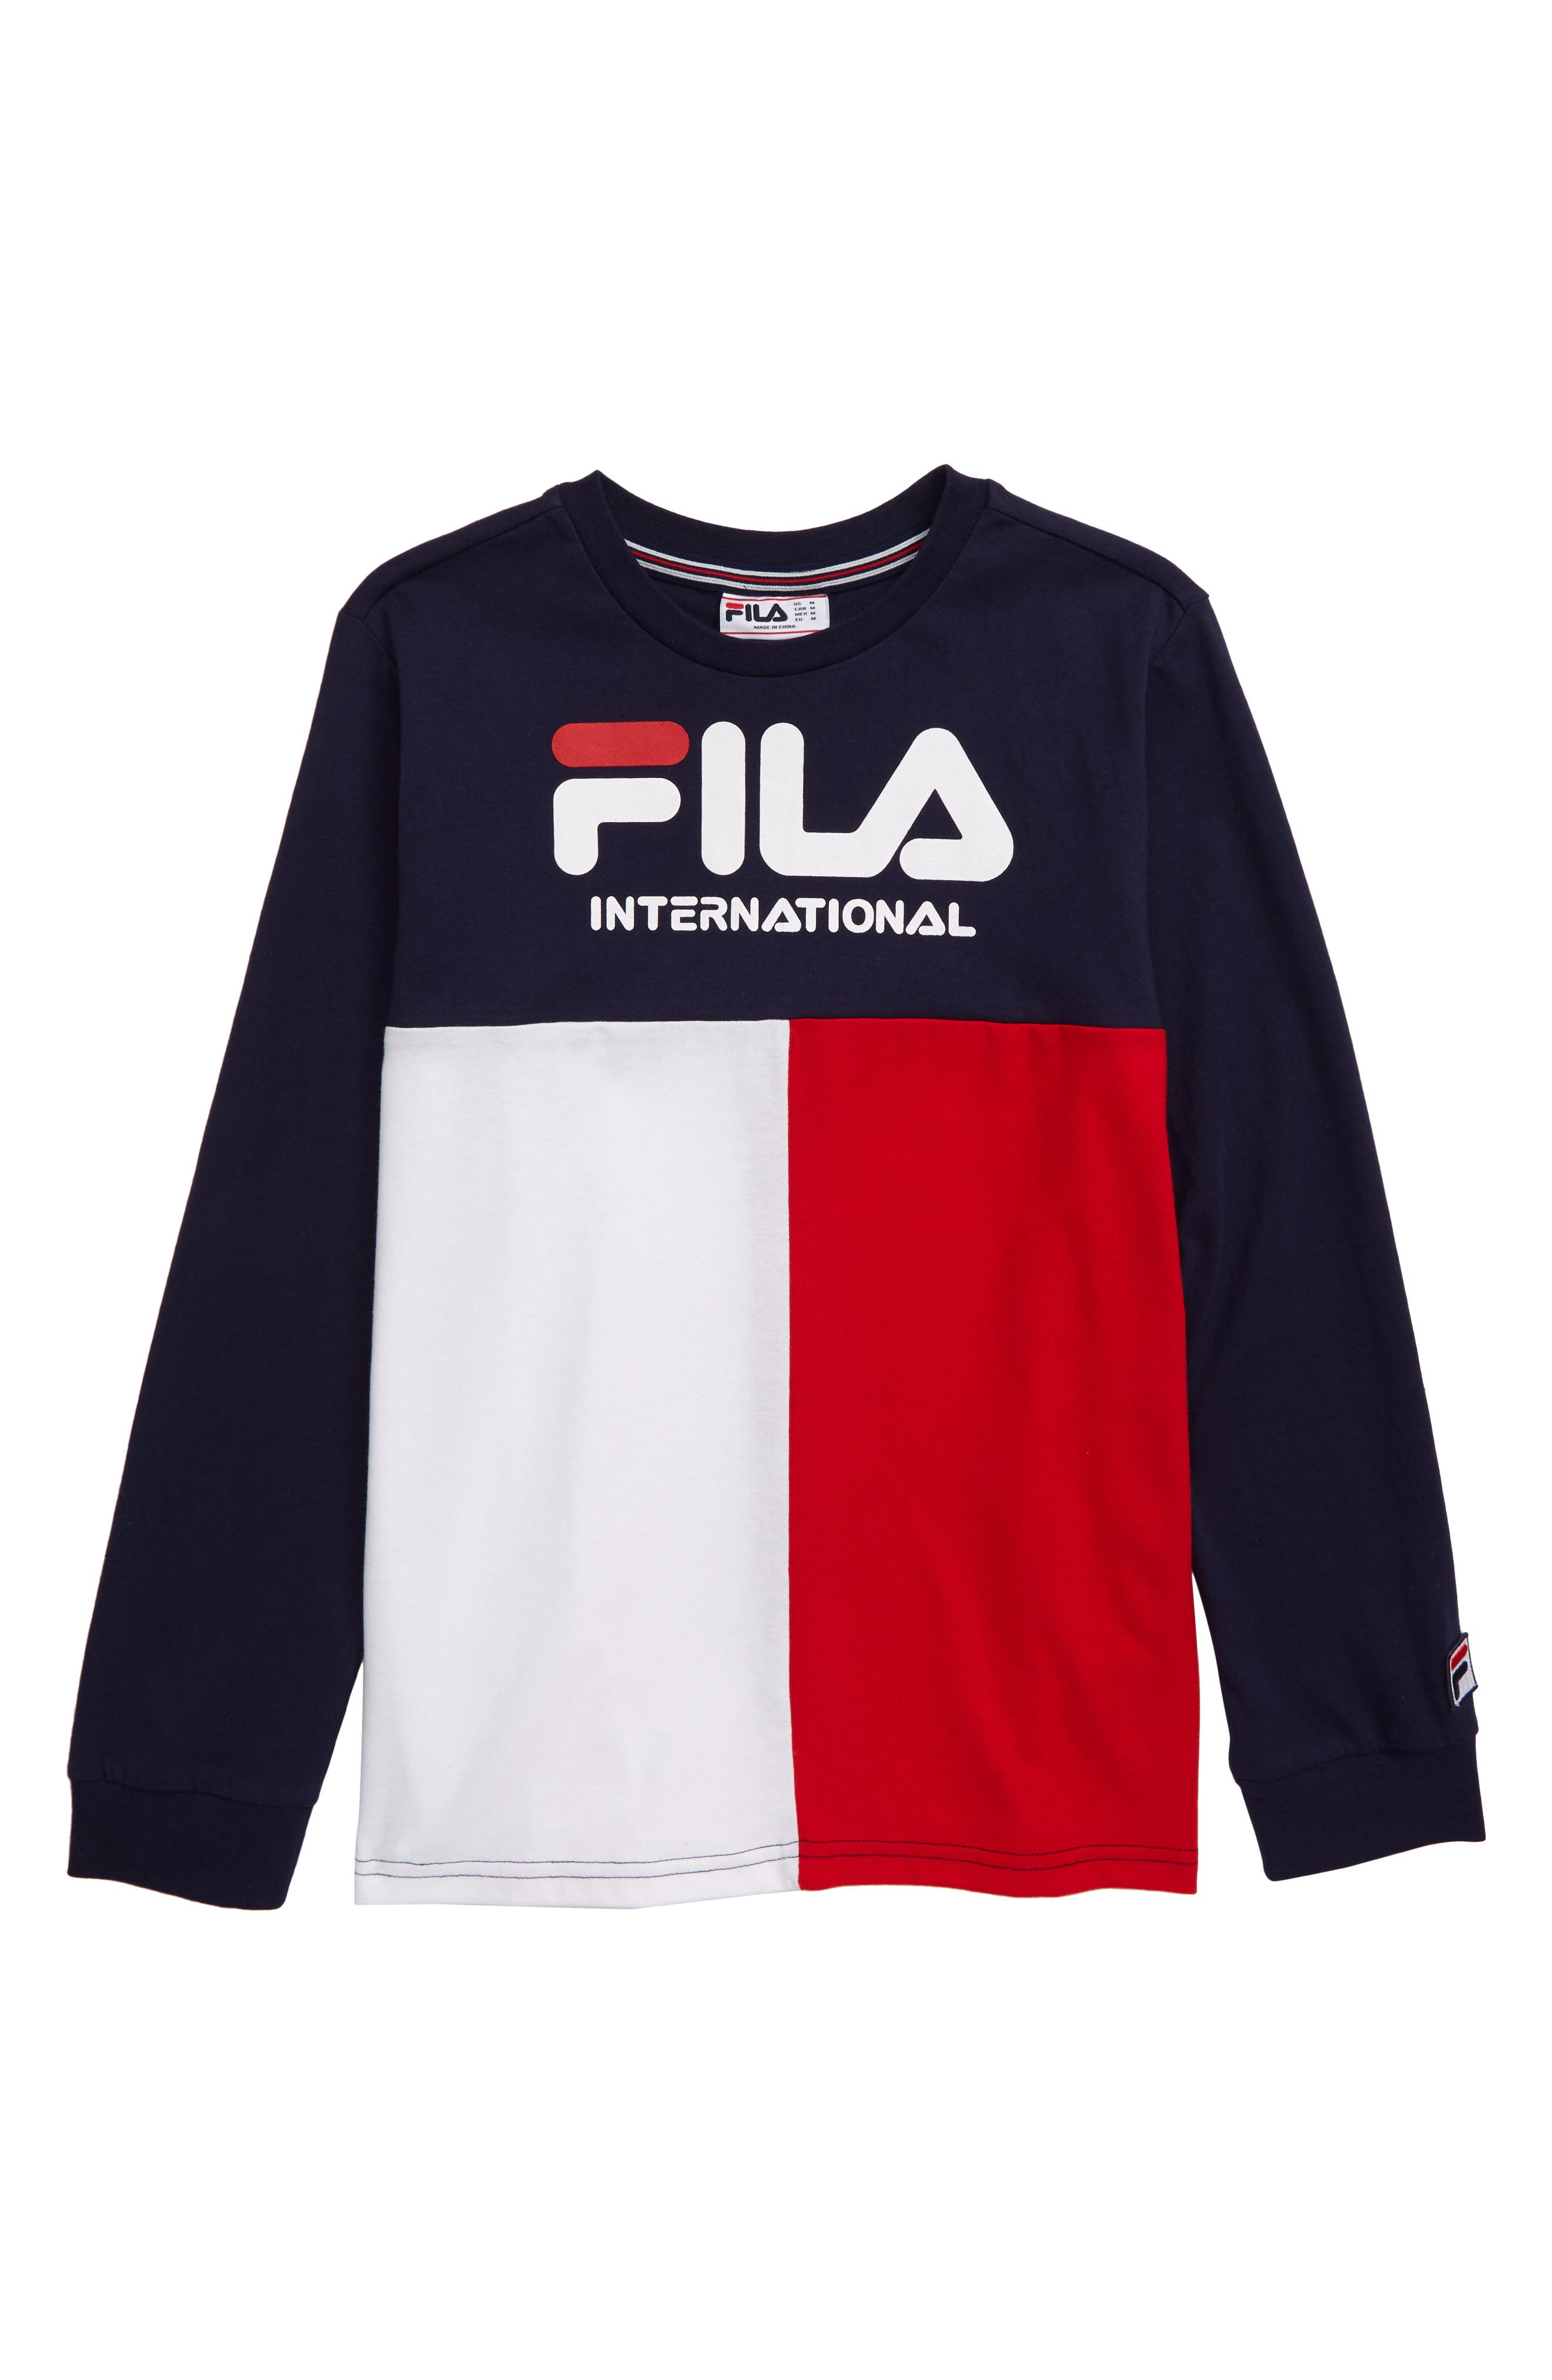 Fila Shirt Long Sleeve on Sale, 59% OFF | atheneainstitute.com